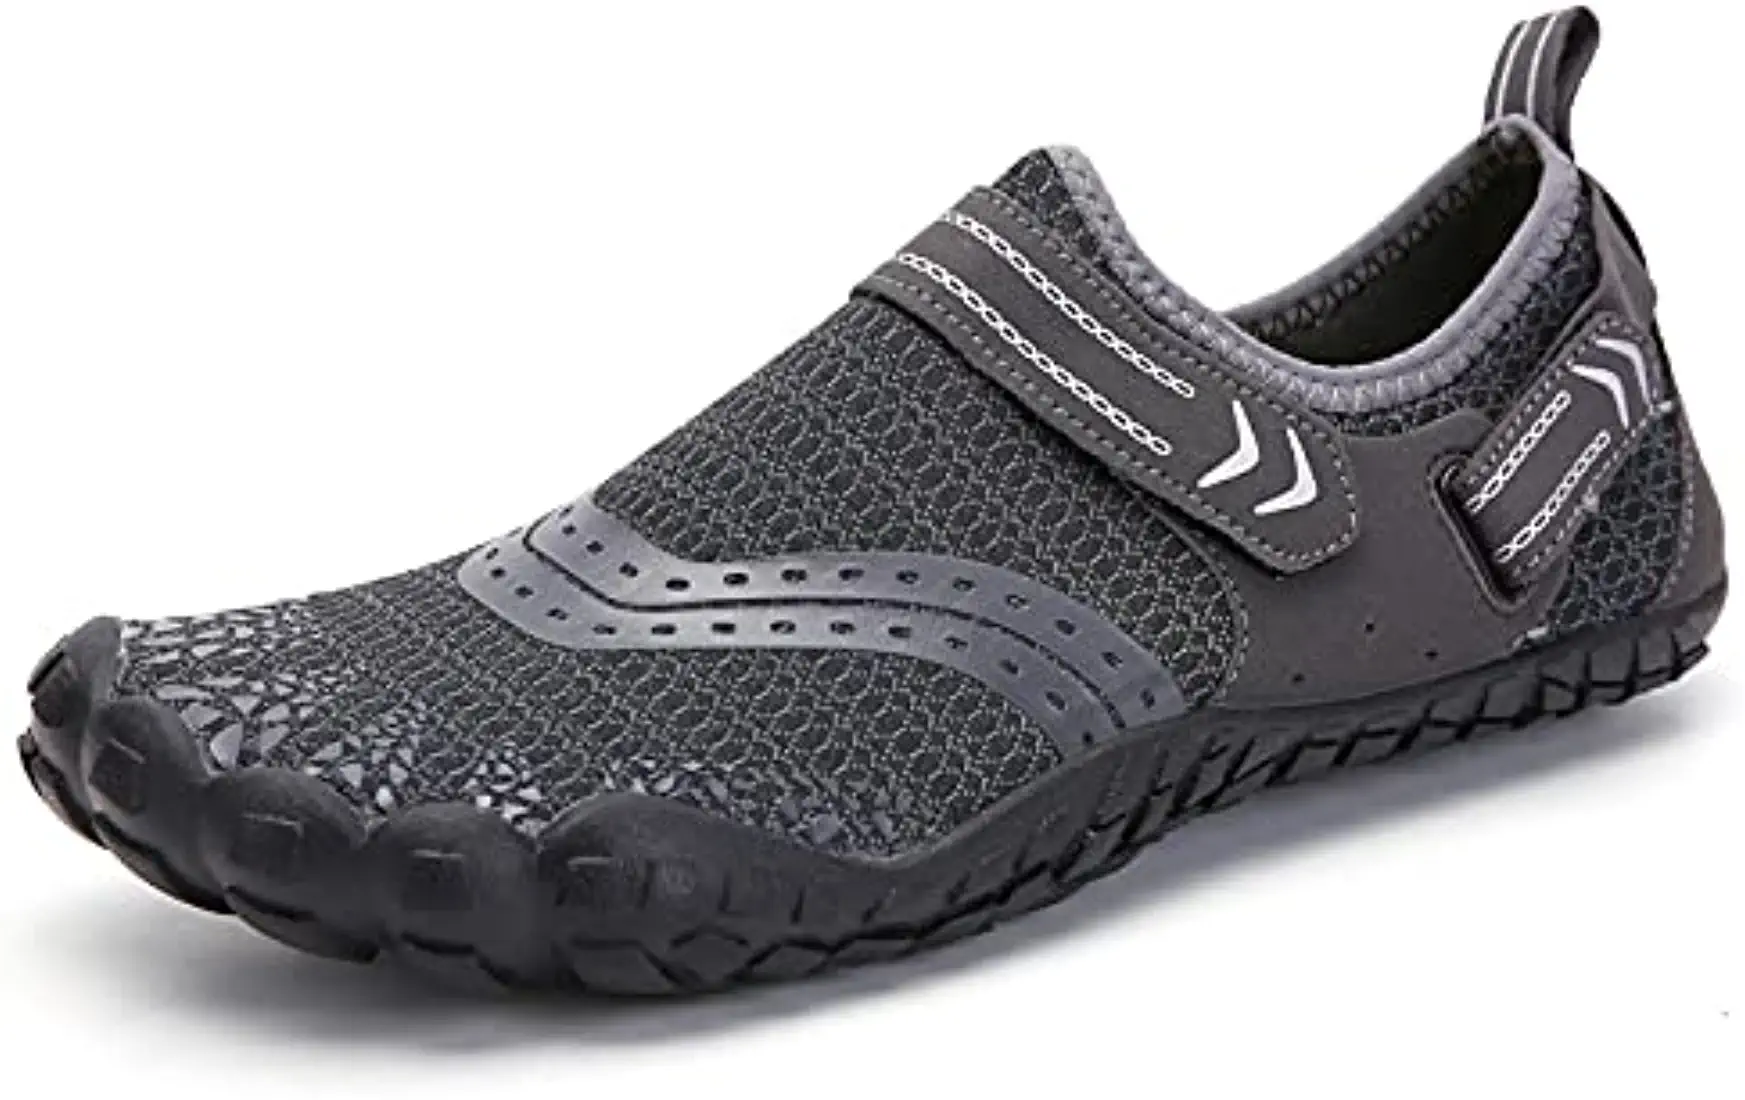 ANDUNE Men's Barefoot & Minimalist Cross Training Shoes – Grey Bolts | Wide Toe Box | Zero Drop Sole |